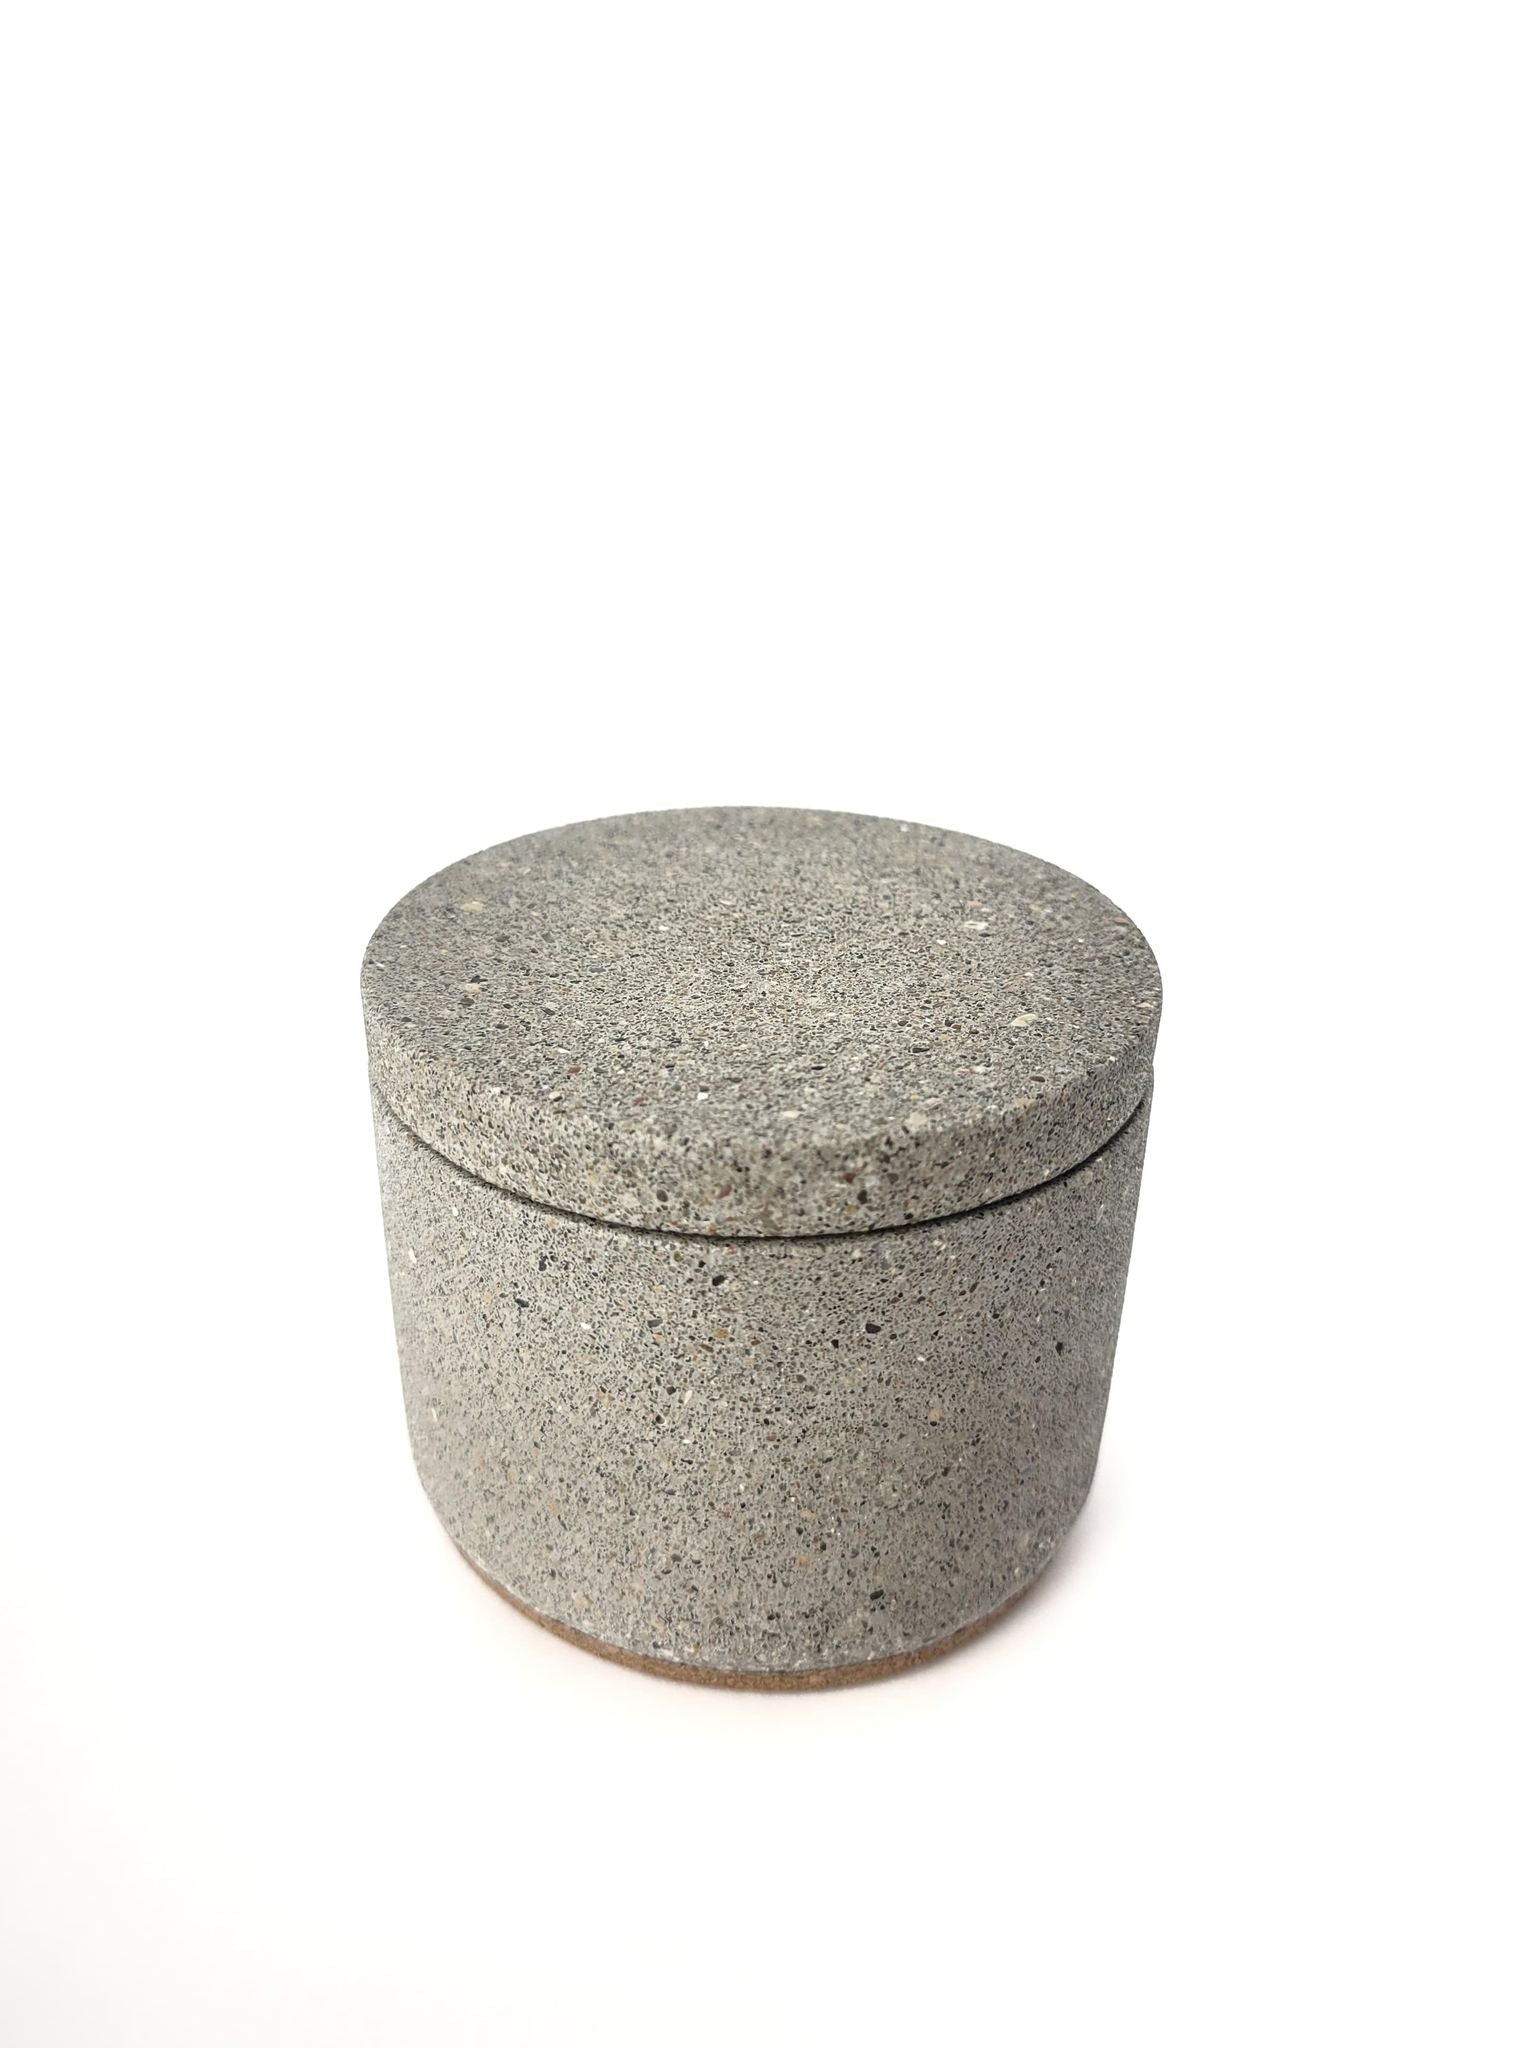 Sandstone Salt and Pepper cellar, Minimalist seasoning pot